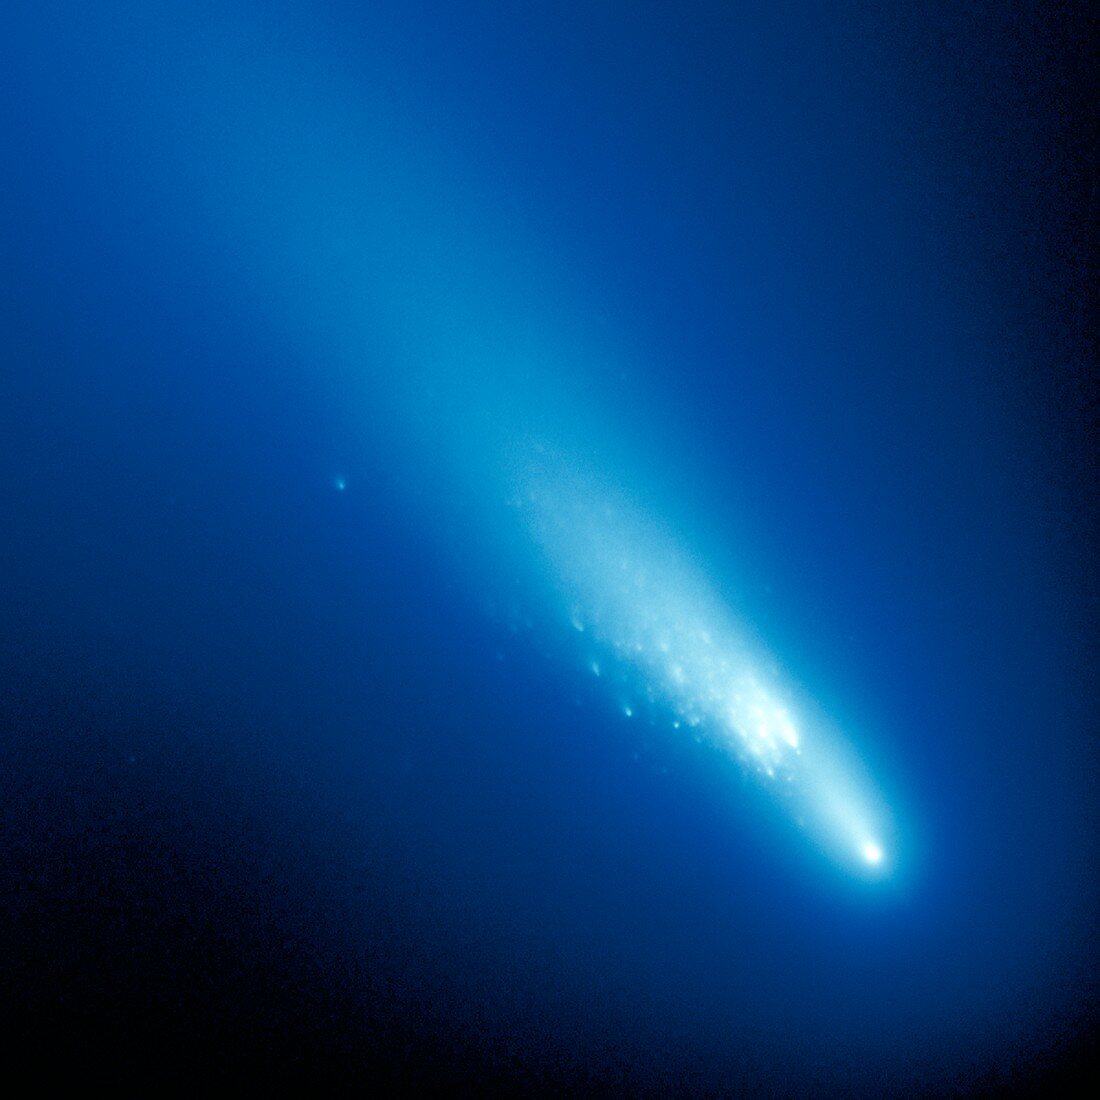 Comet,Hubble image